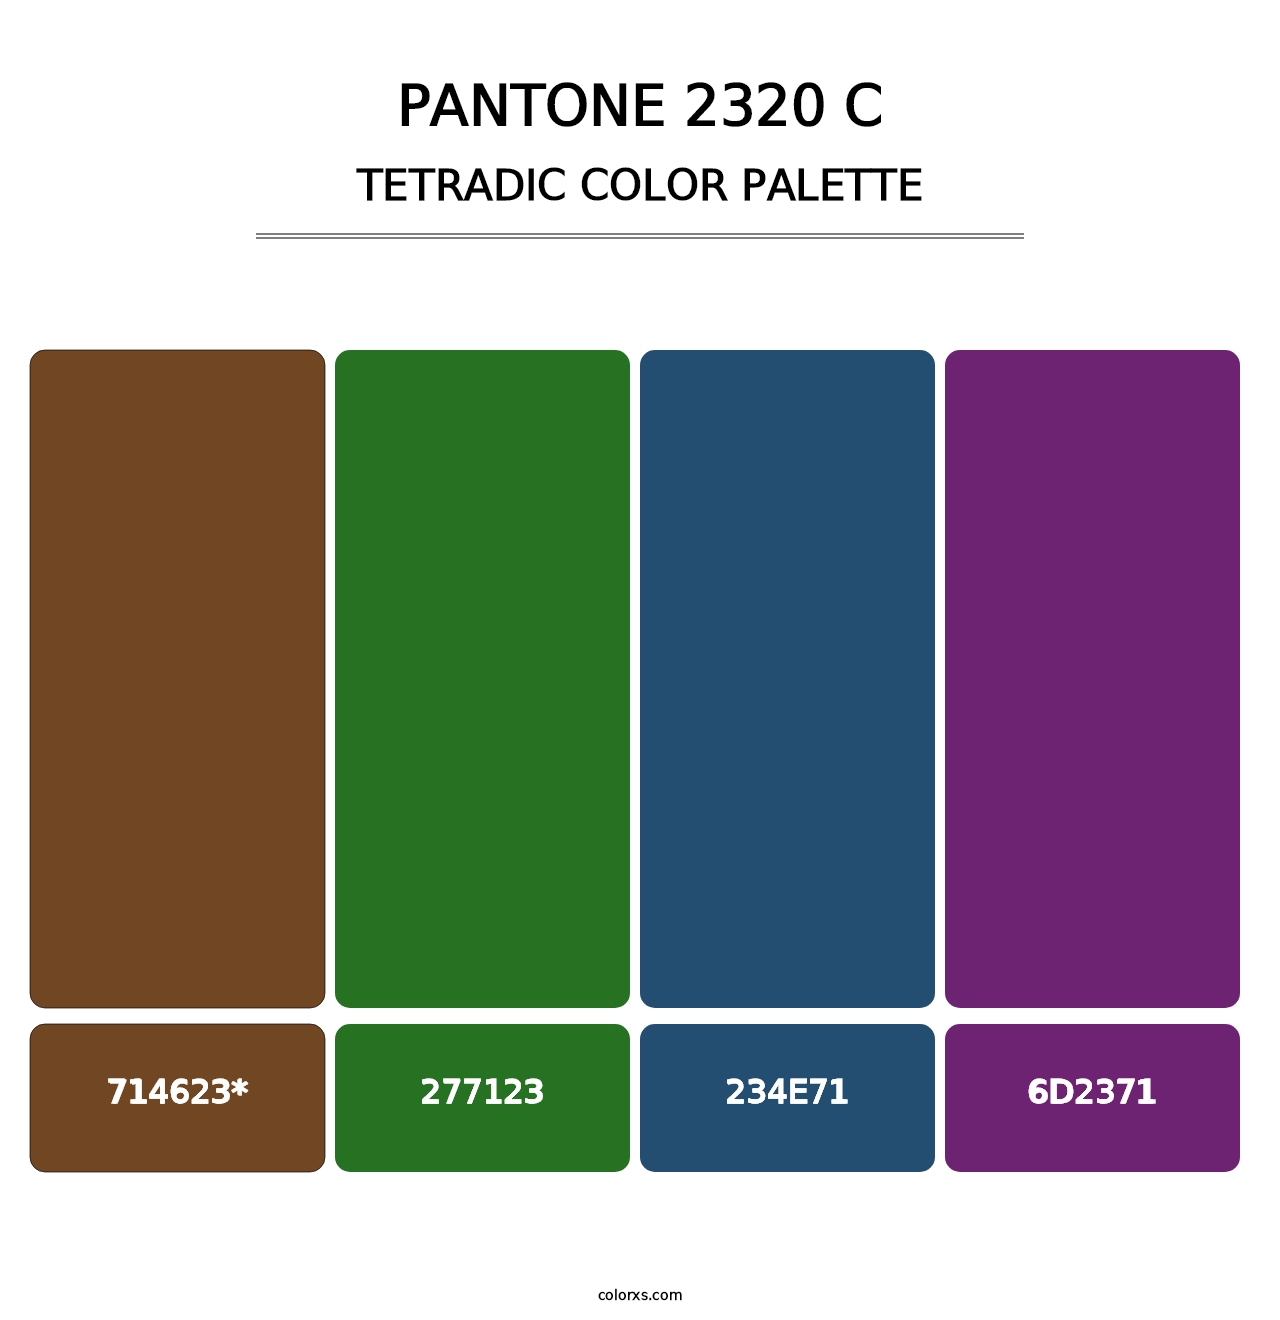 PANTONE 2320 C - Tetradic Color Palette